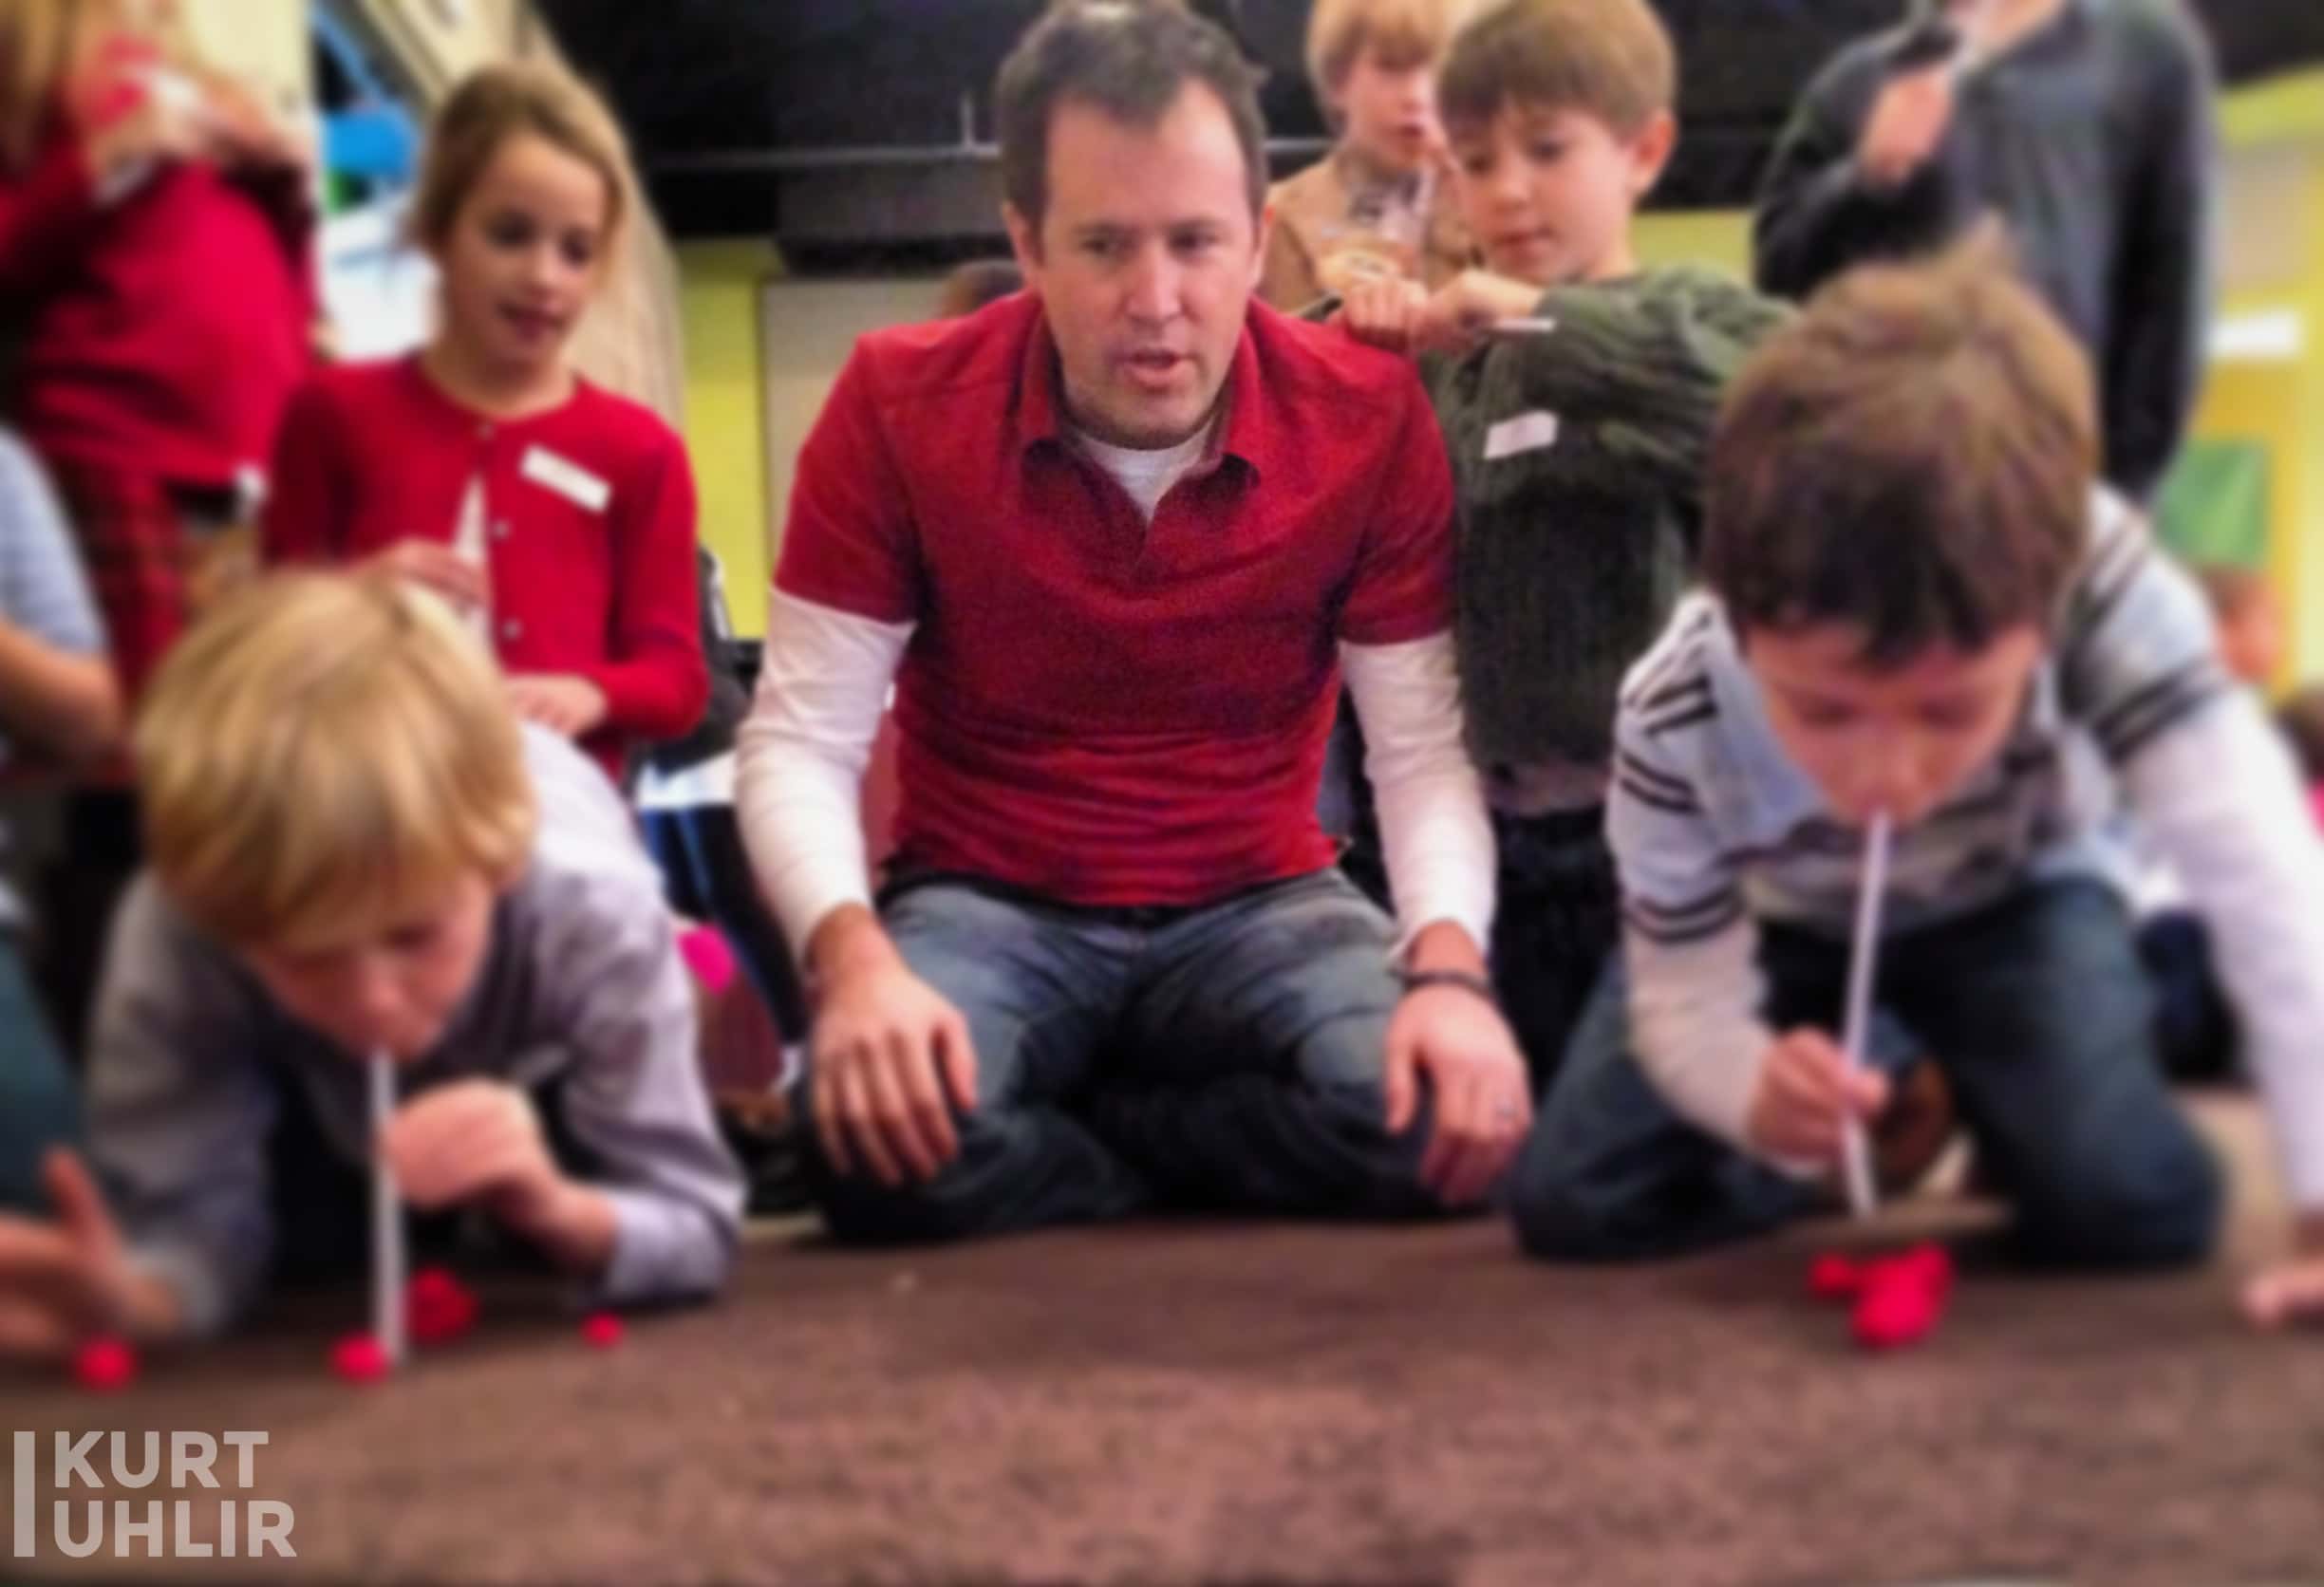 Serving with children at church - Kurt Uhlir